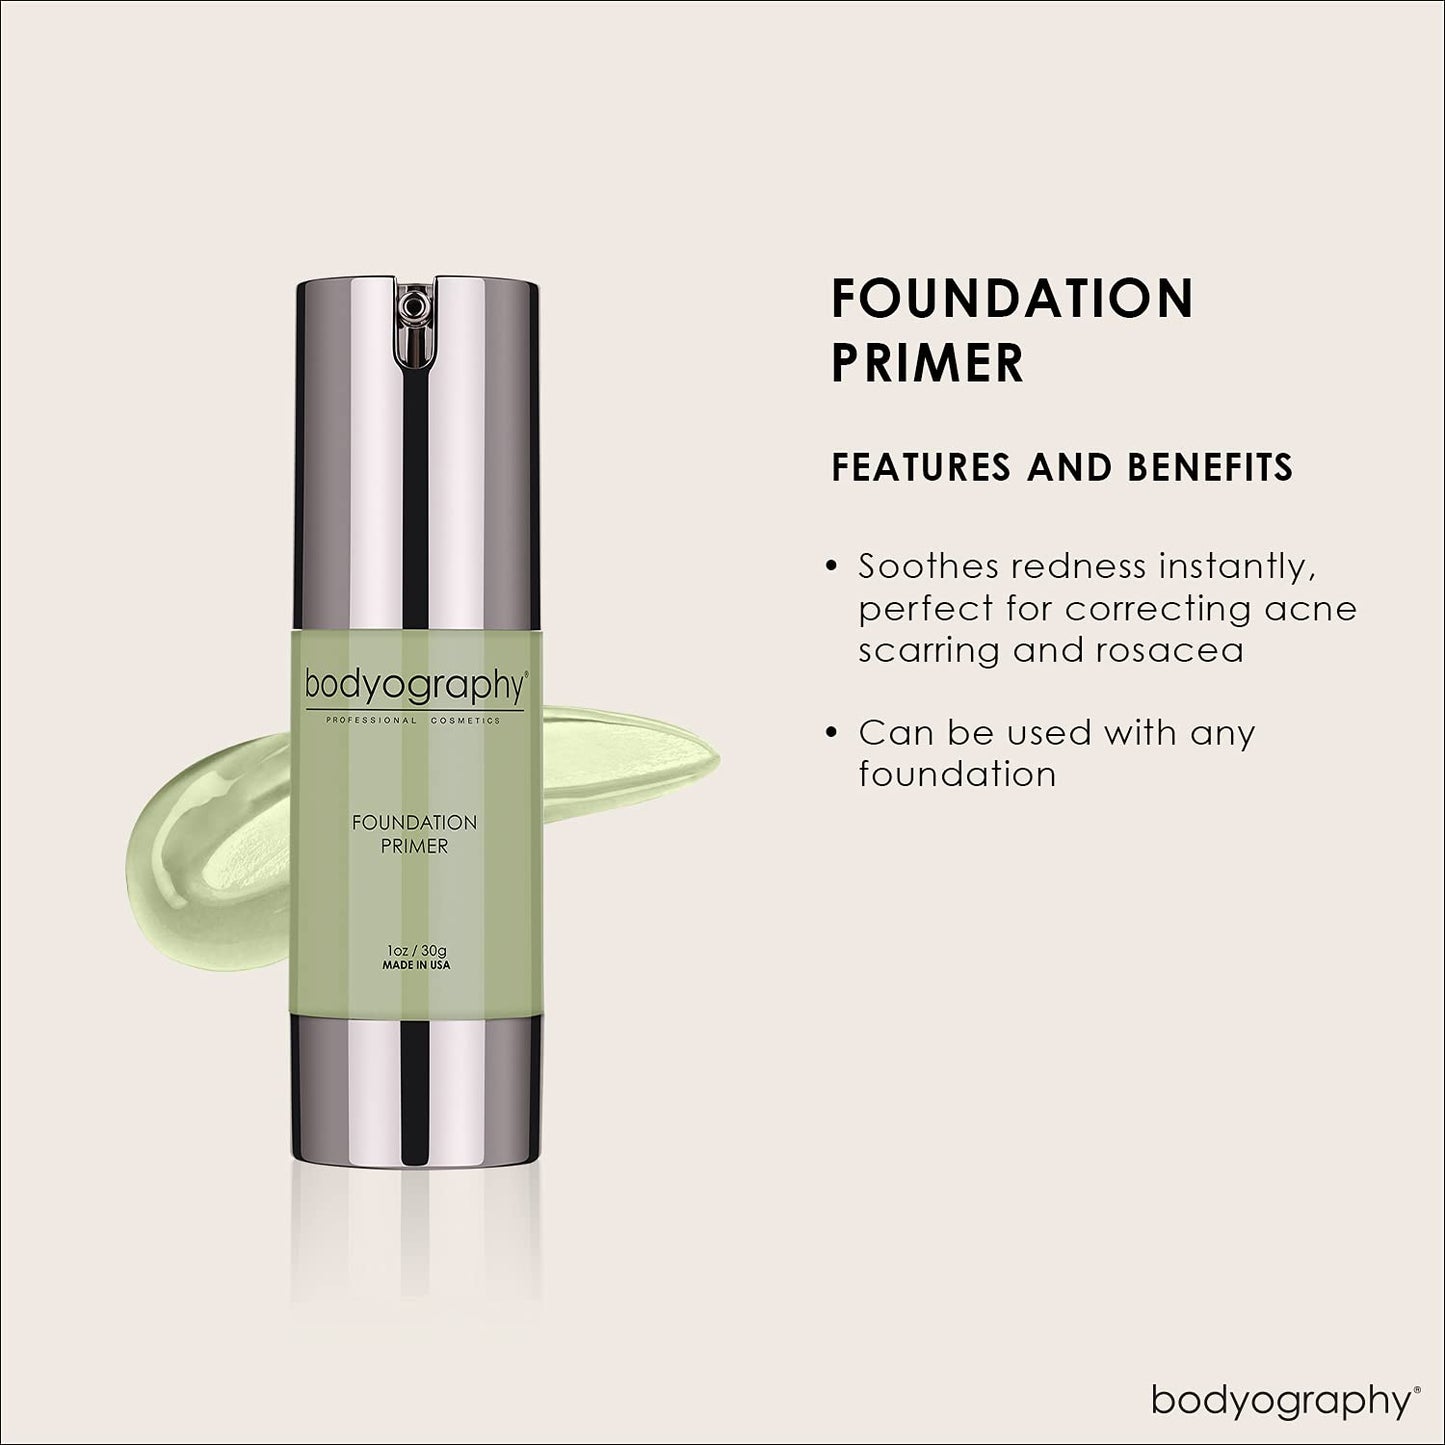 BODYOGRAPHY - Foundation Primer (Green): Flawless Anti-Aging Salon Makeup Primer w/Vitamin E, A, Jojoba, Grapeseed Oil | Control Shine | Gluten-Free, Cruelty-Free, 1 oz.